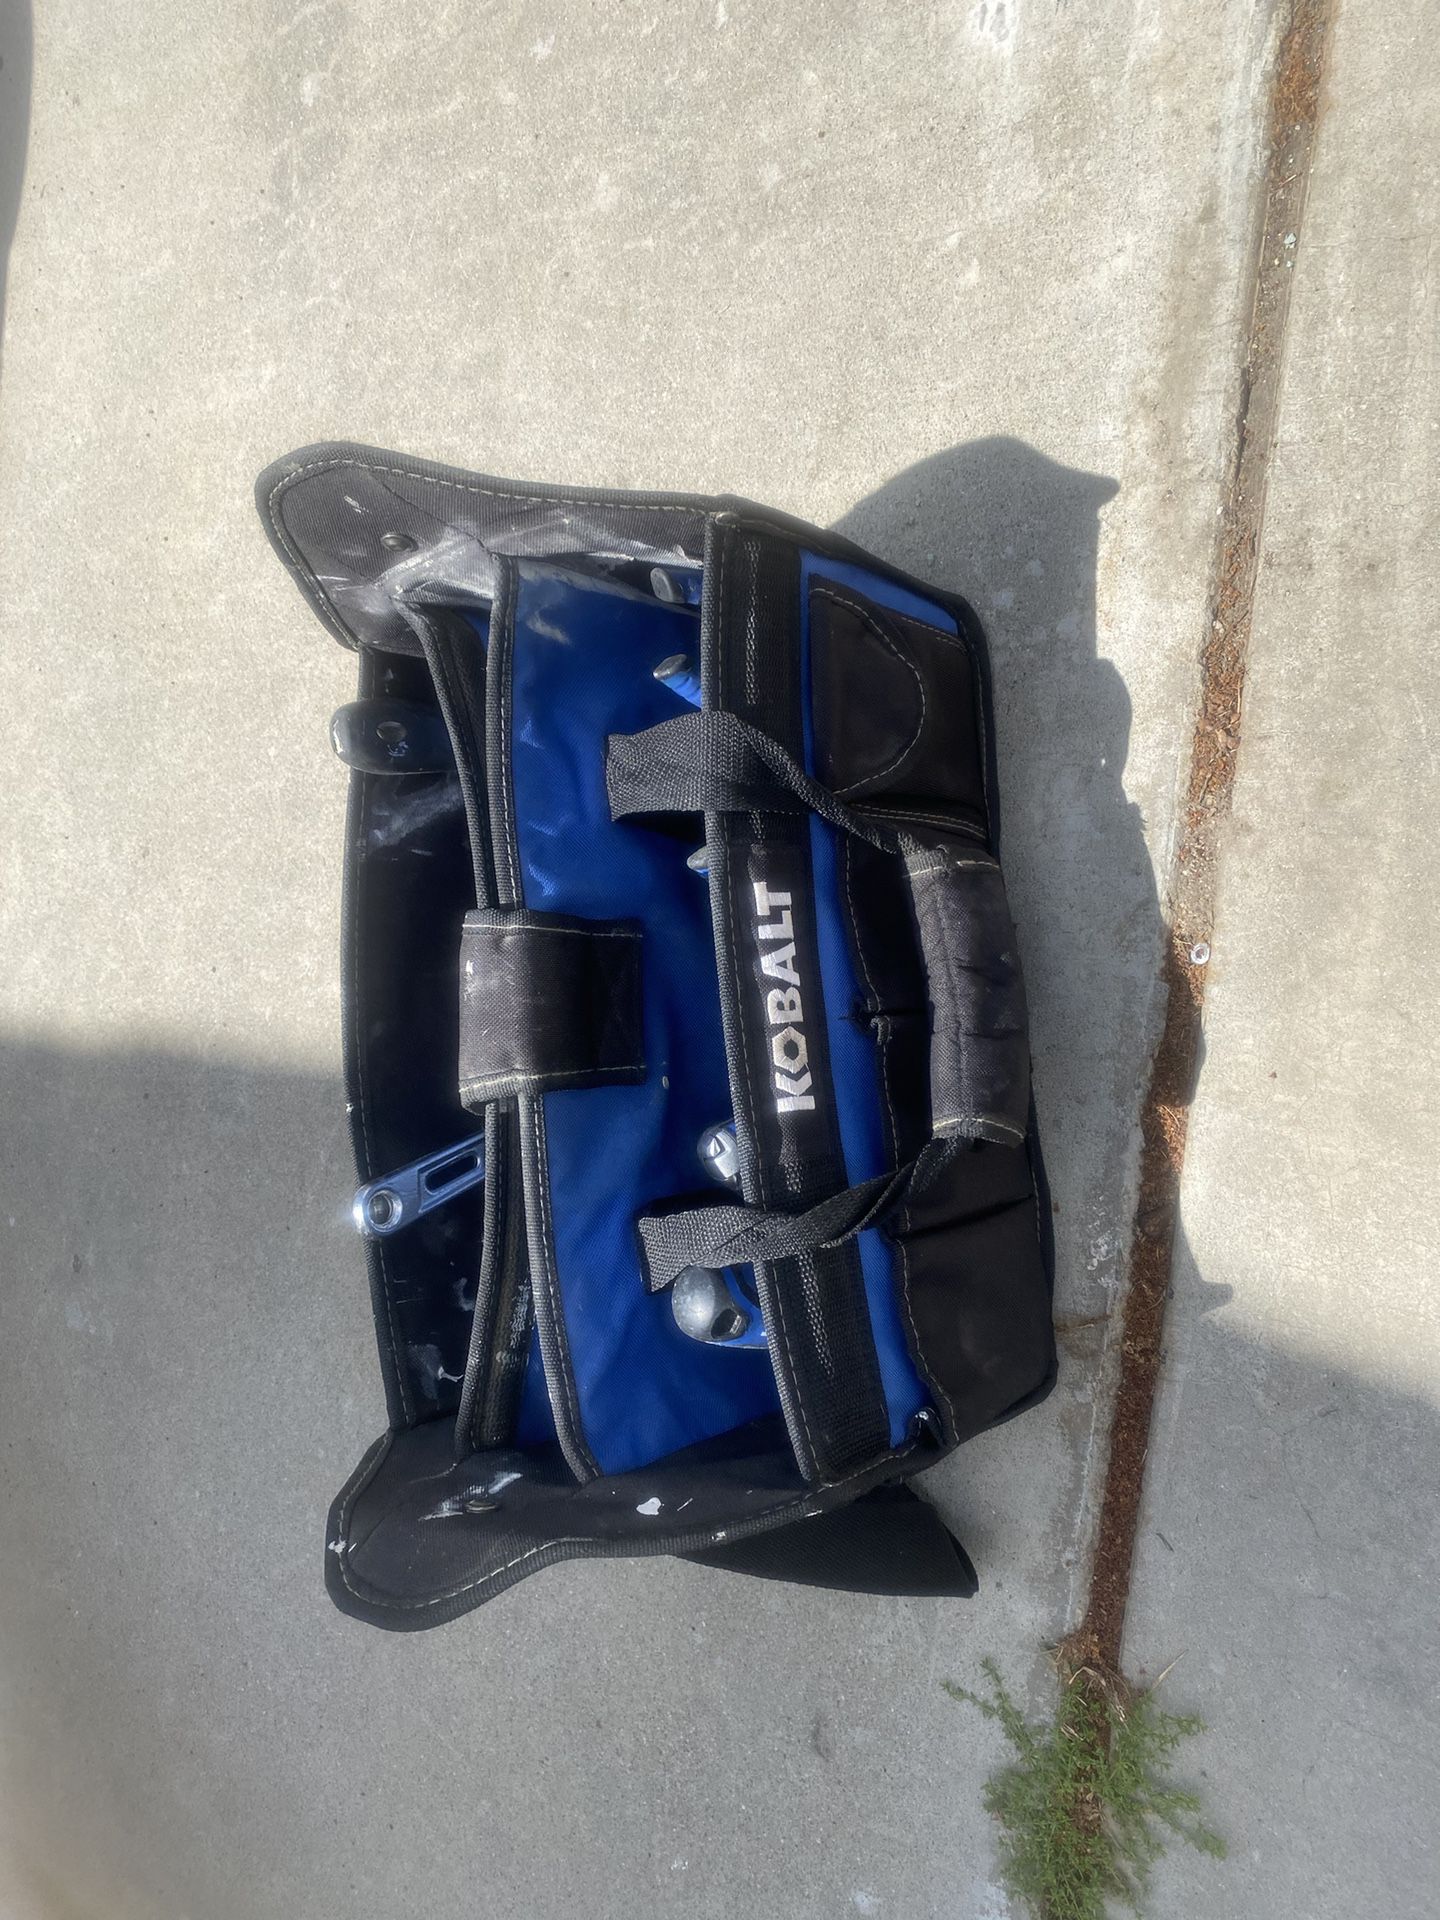 Cobalt tool bag, and tools